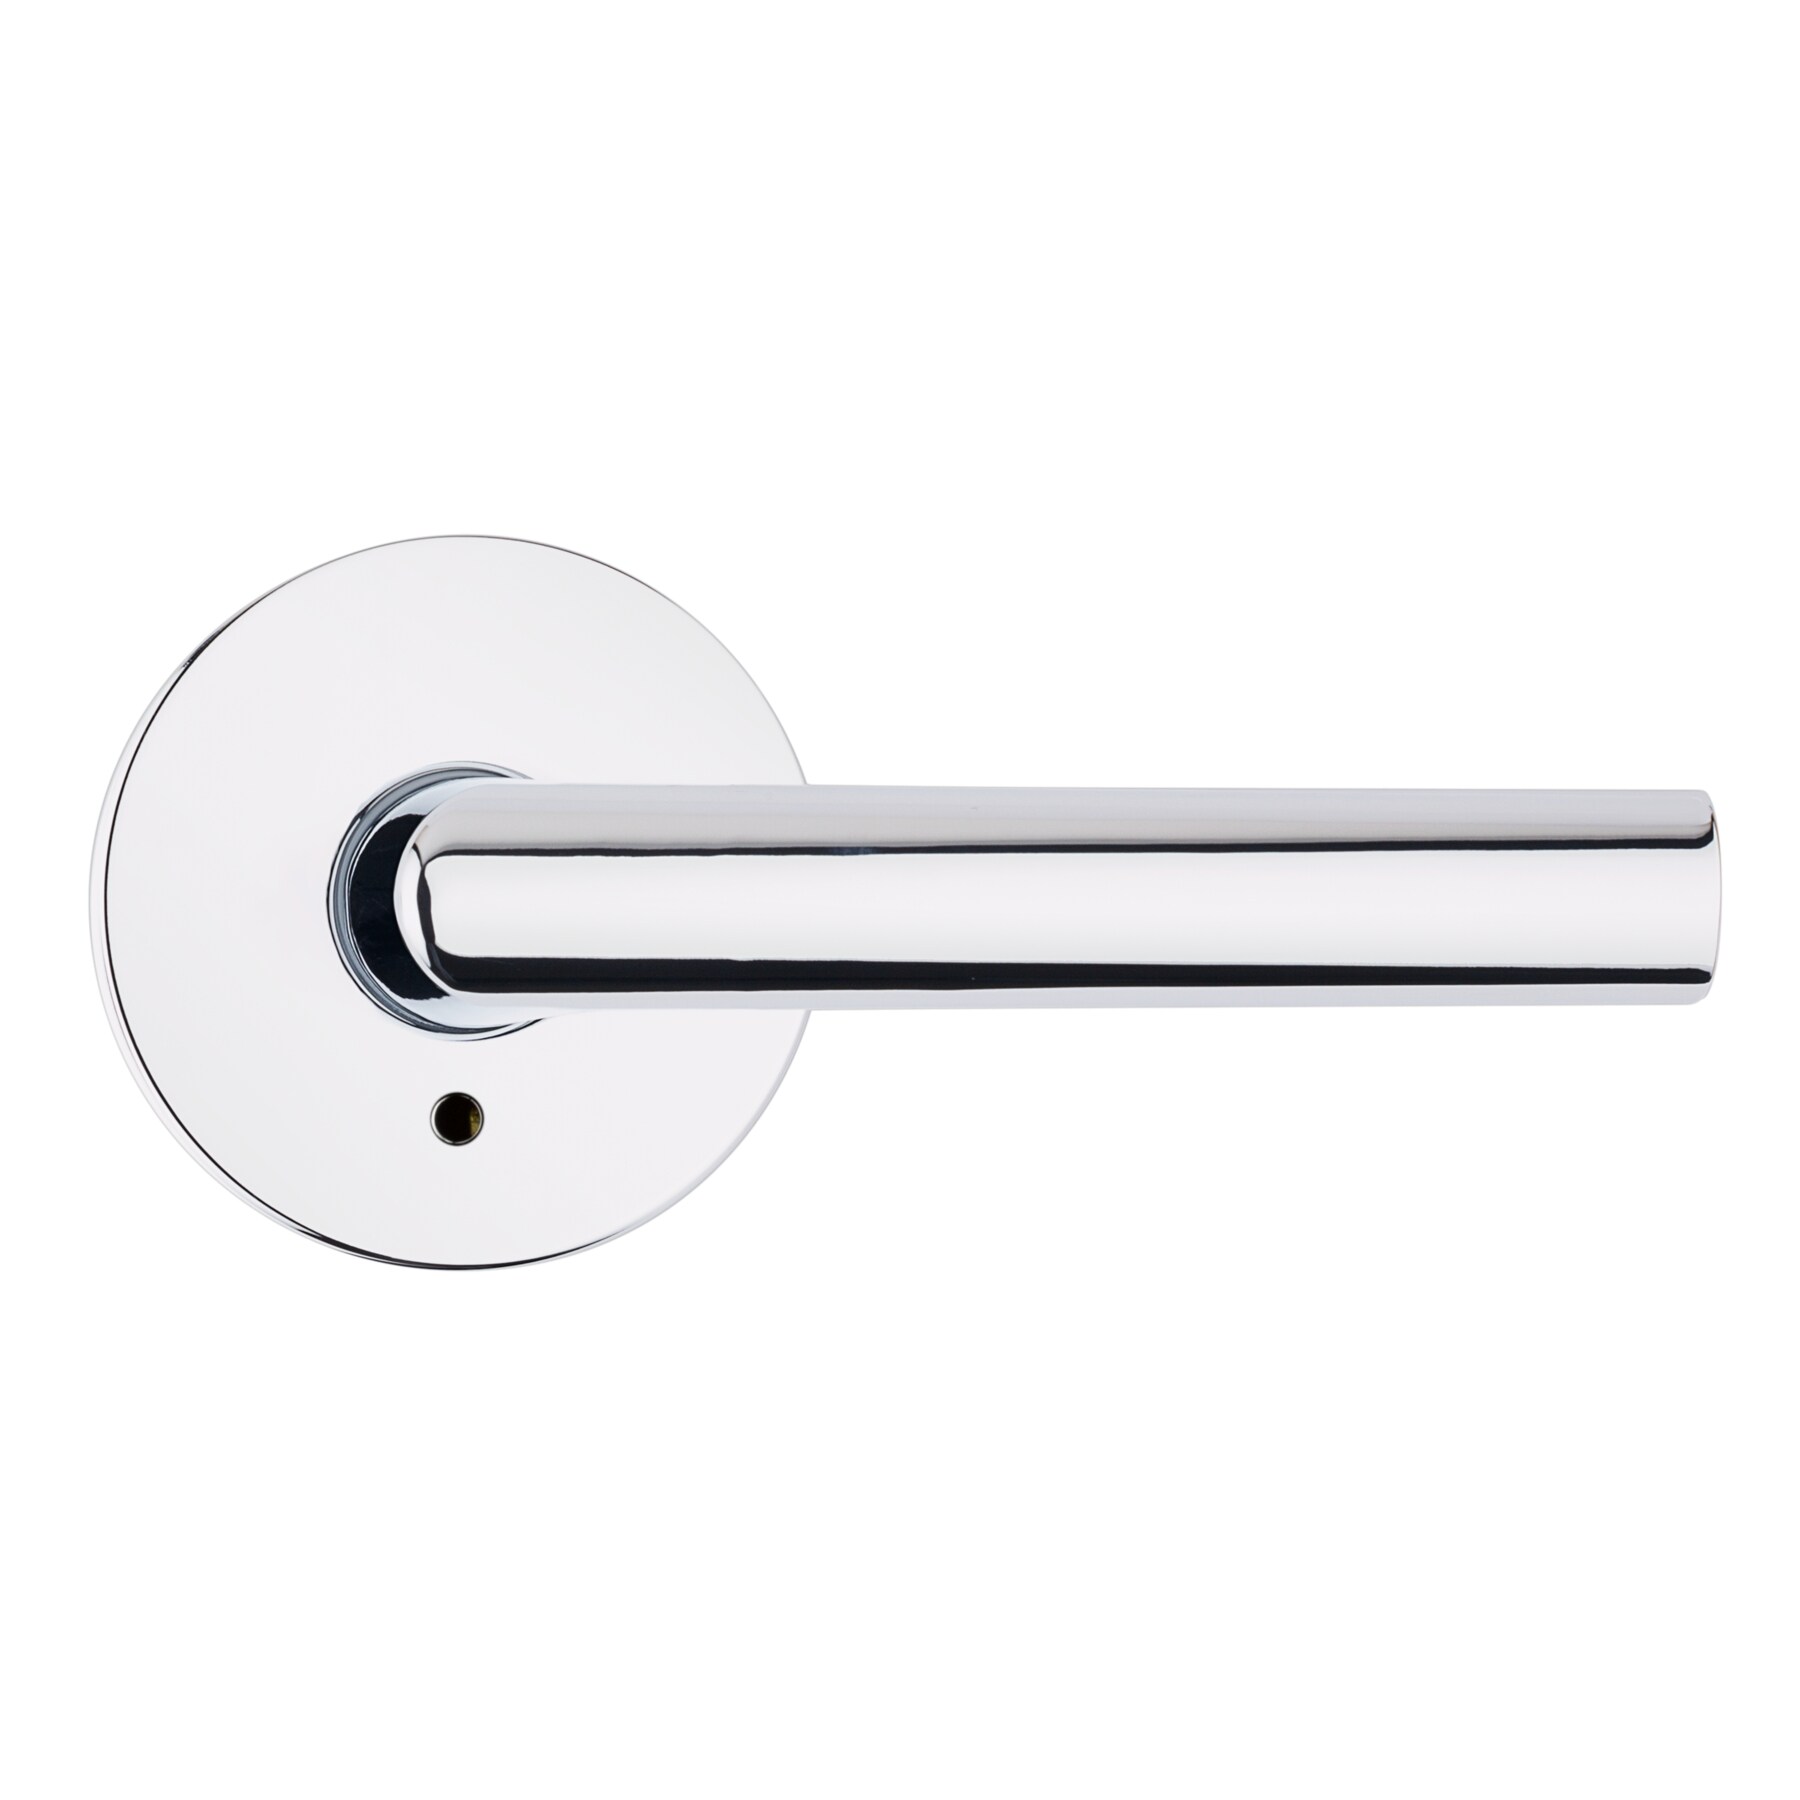 Chrome or Satin Chrome Latch Lock or Bathroom Milan Door Handles Brass